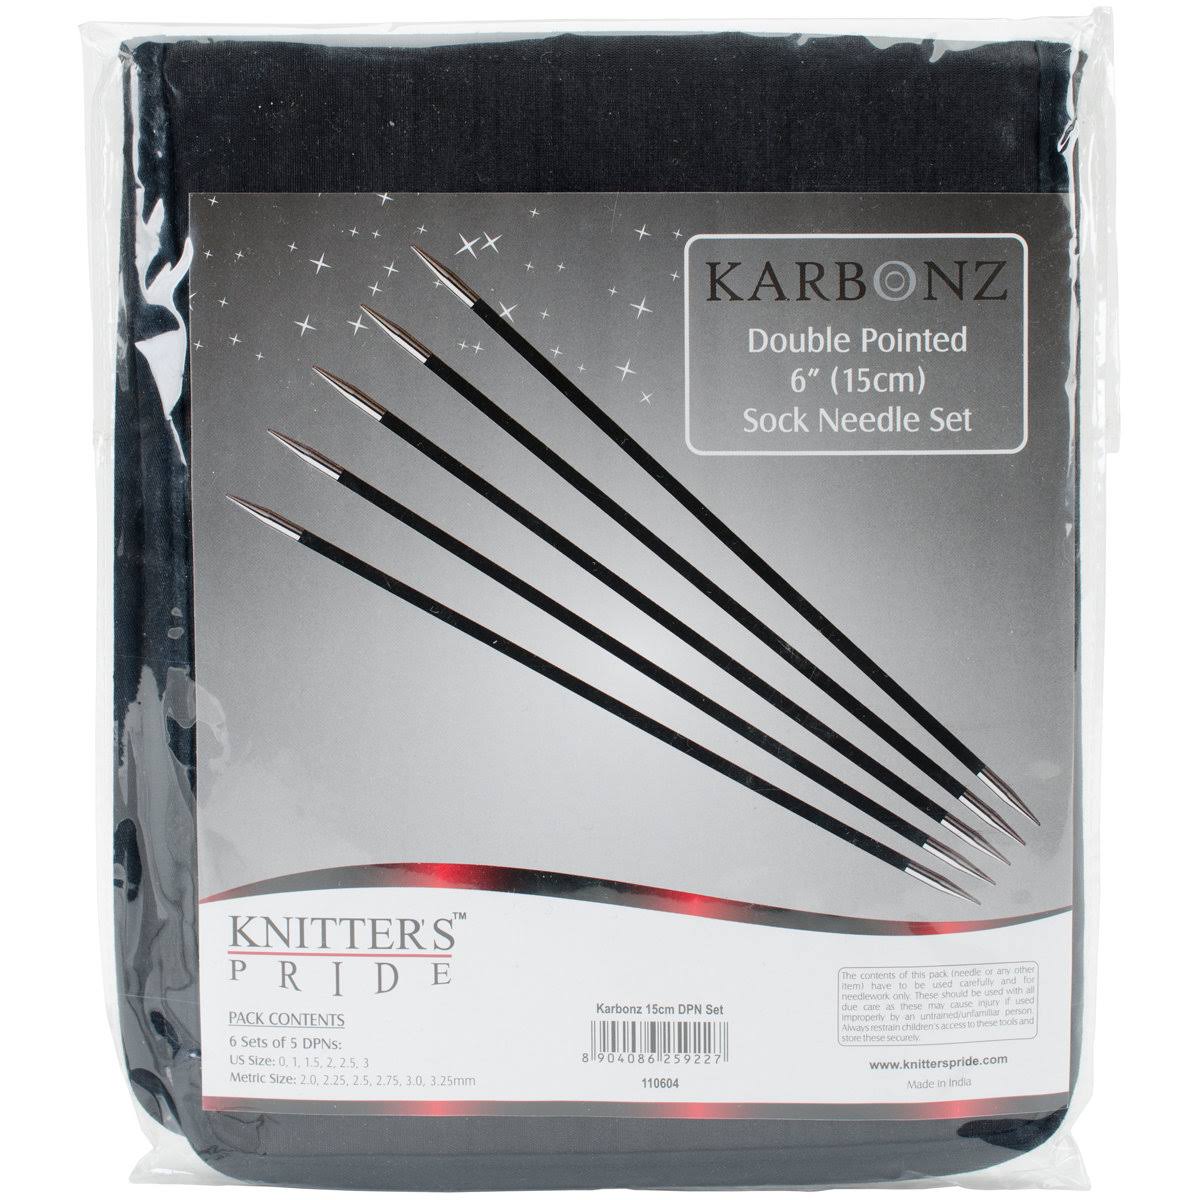 Knitter's Pride Karbonz Double Pointed Needles Set Socks Kit KP110604